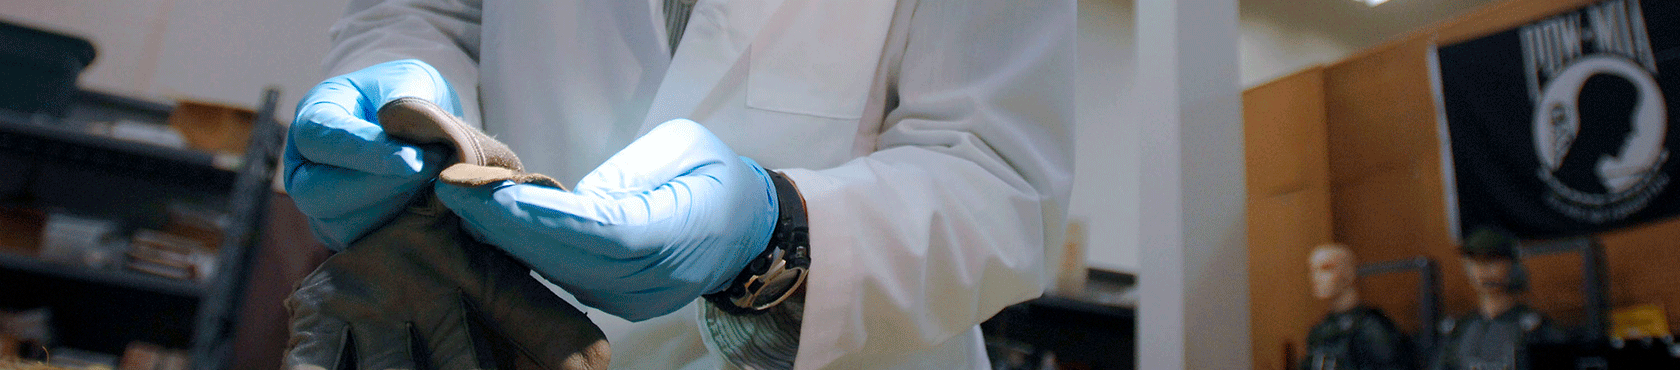 Blue gloves holding gray glove under light